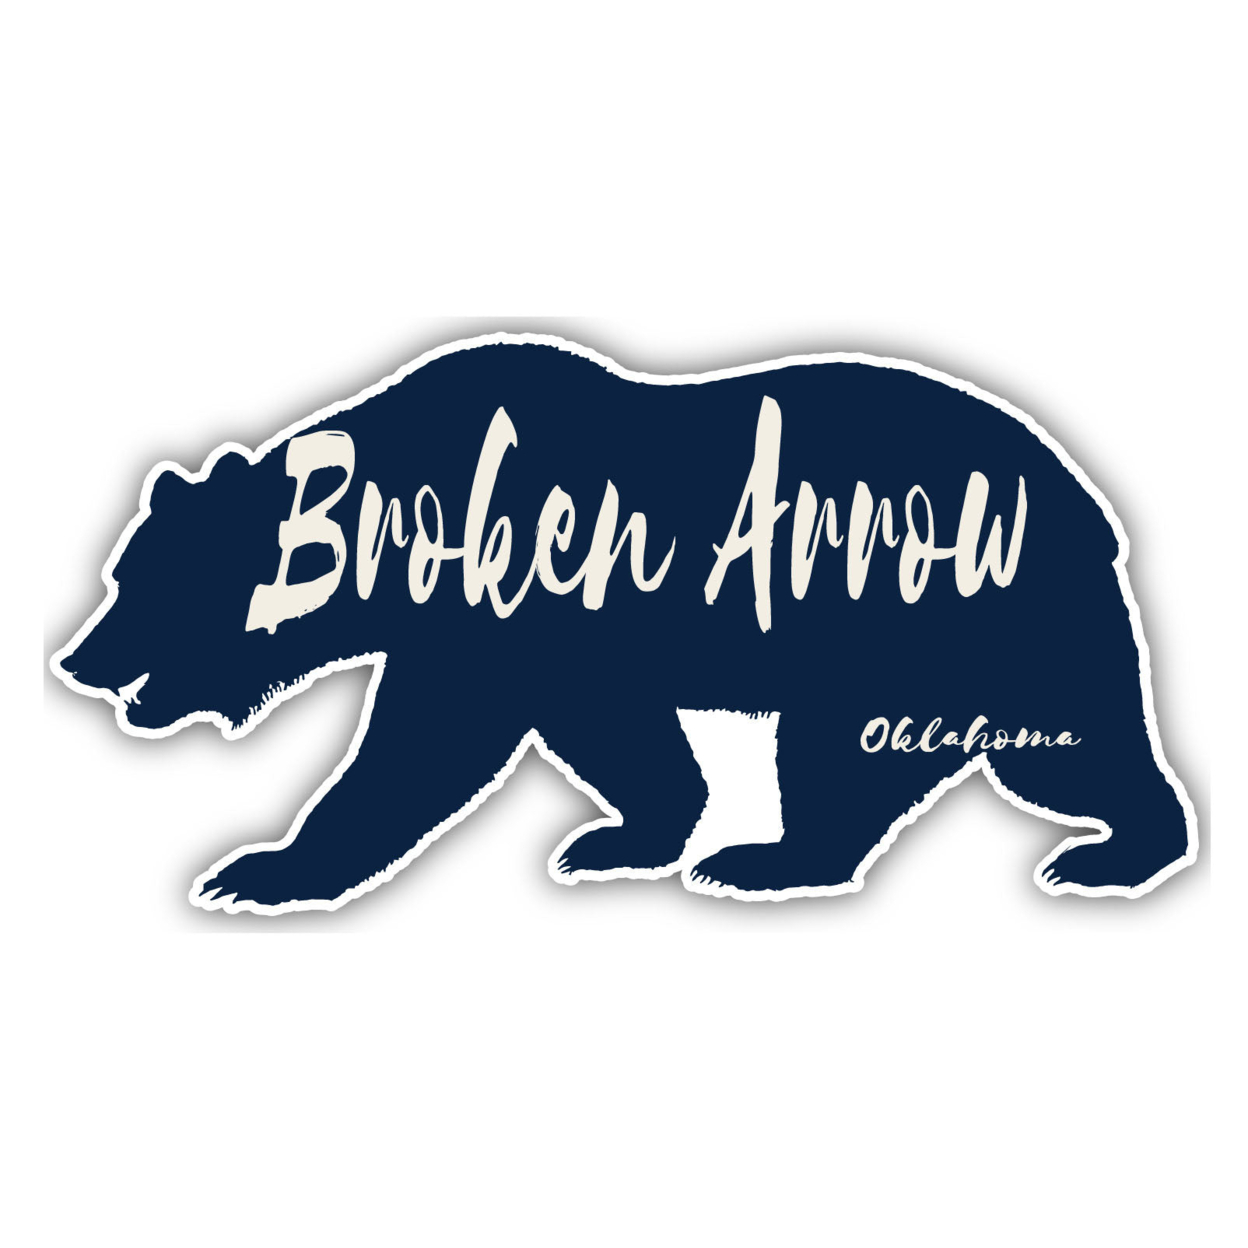 Broken Arrow Oklahoma Souvenir Decorative Stickers (Choose Theme And Size) - 4-Pack, 12-Inch, Bear